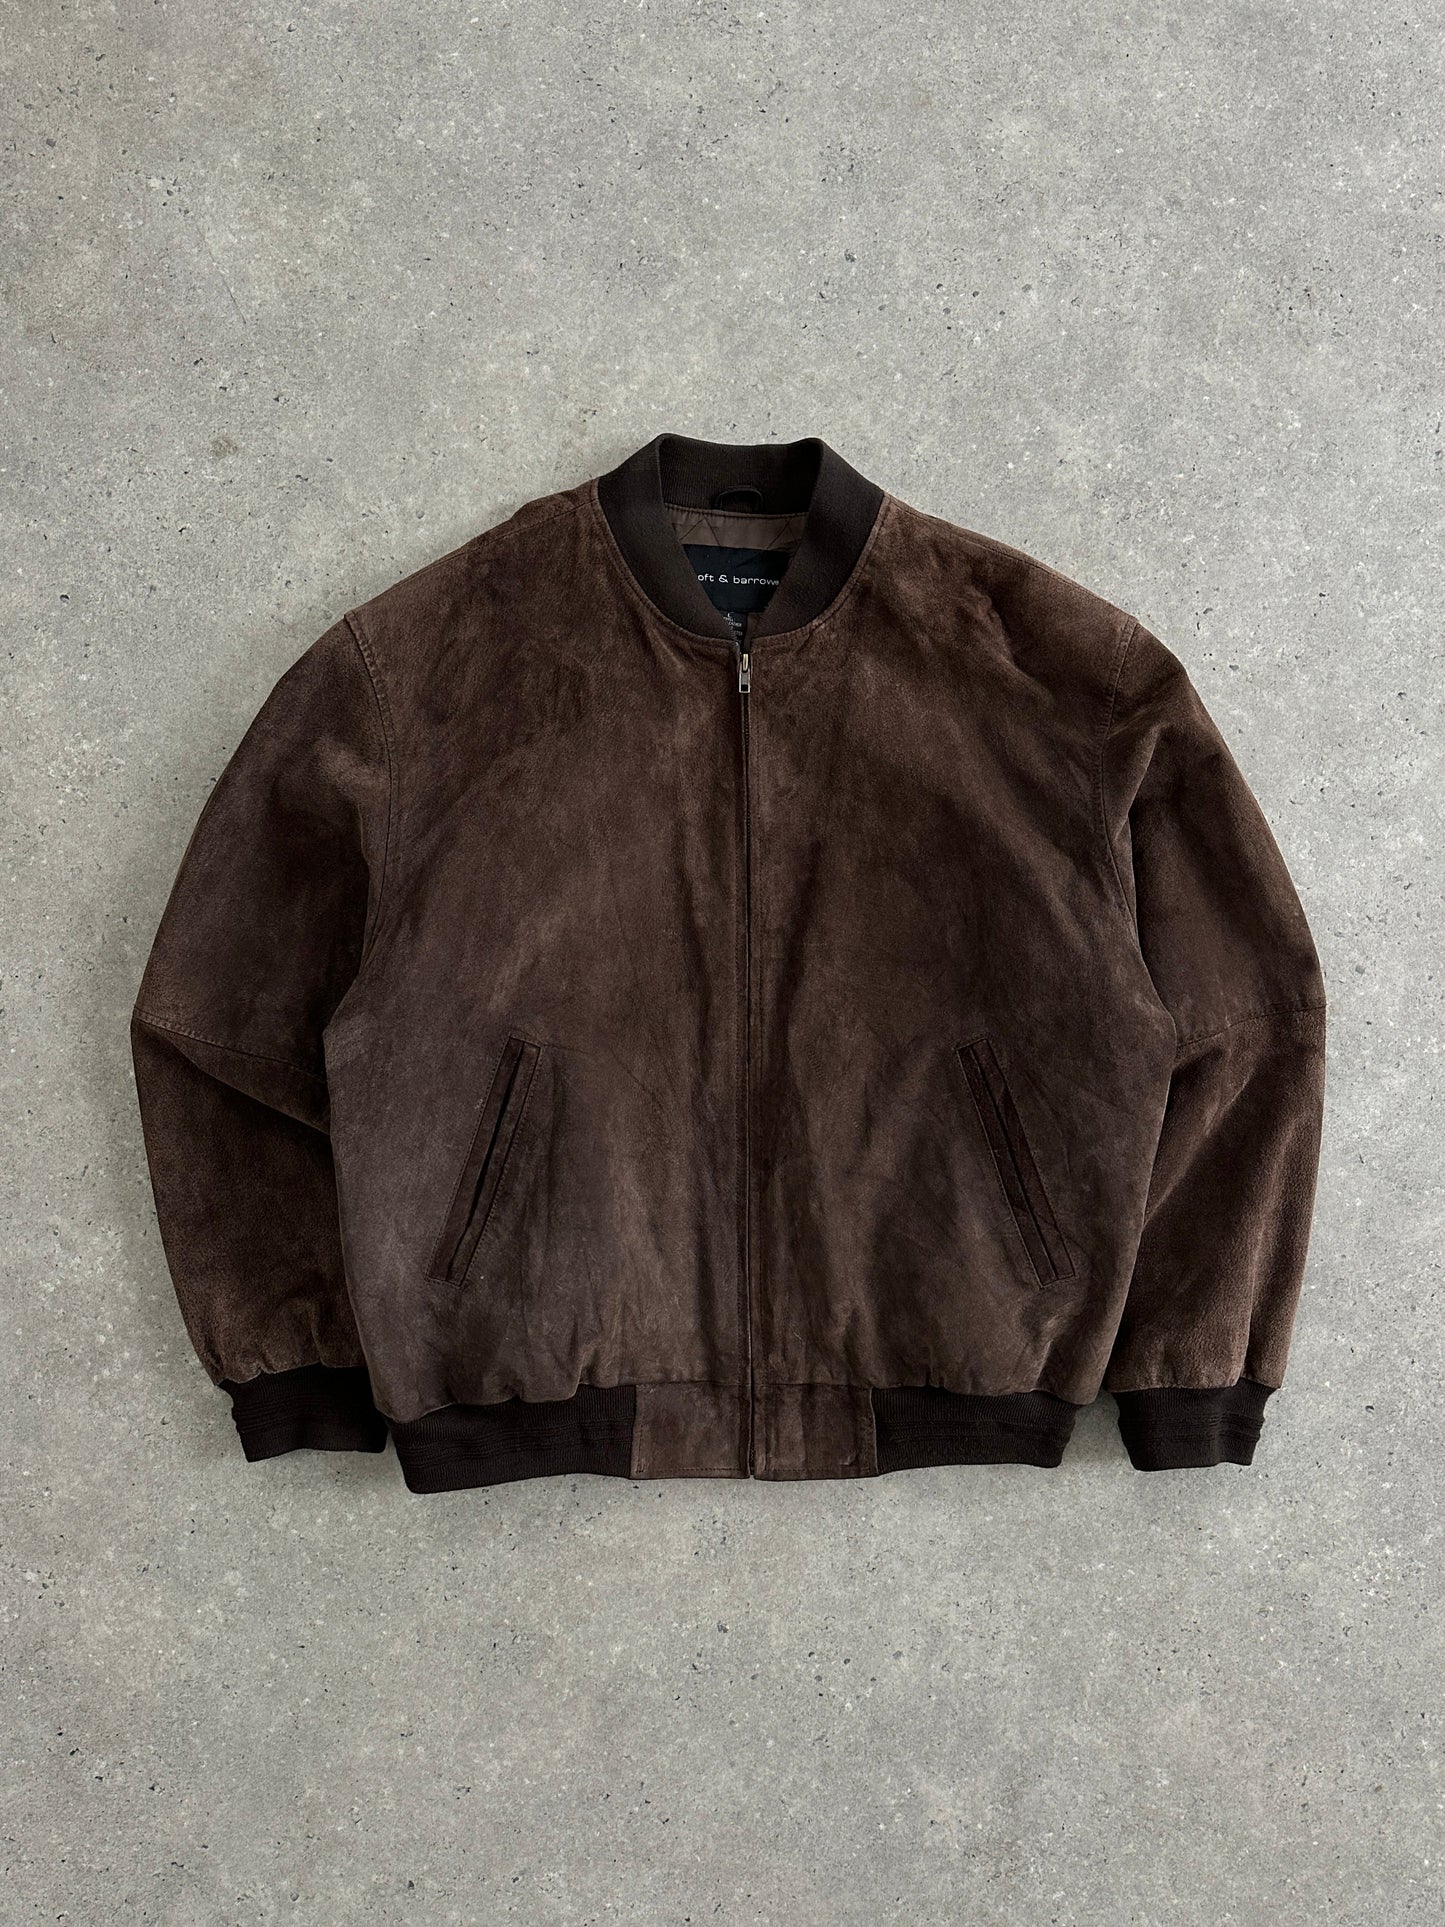 Vintage Suede Leather Bomber Jacket - XL